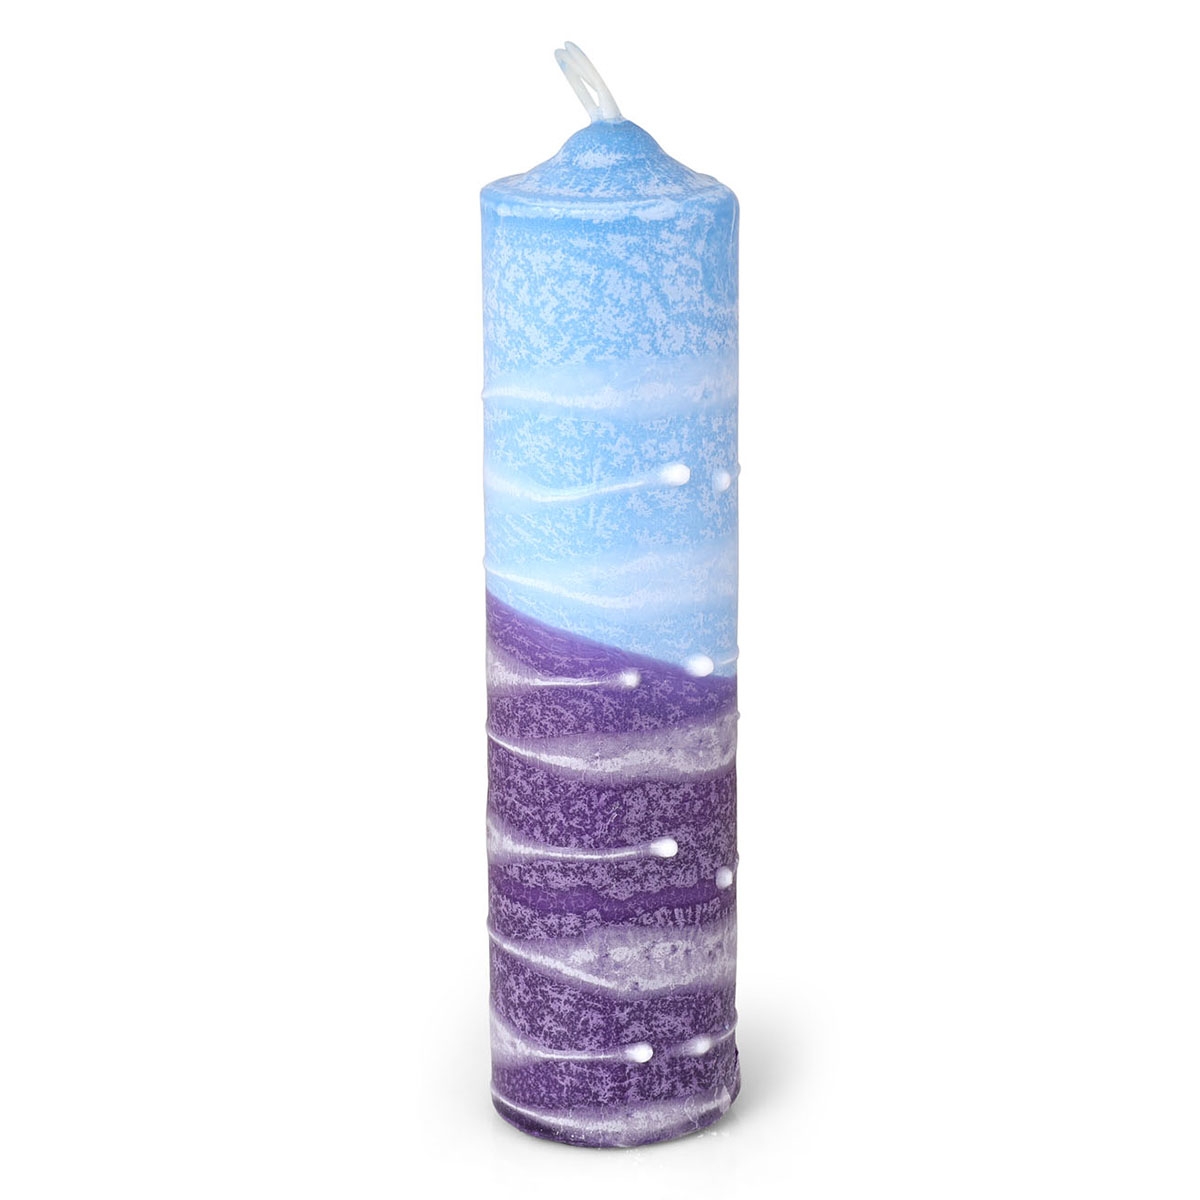 Safed Candles Havdalah Pillar Candle – Blue and Purple  - 1